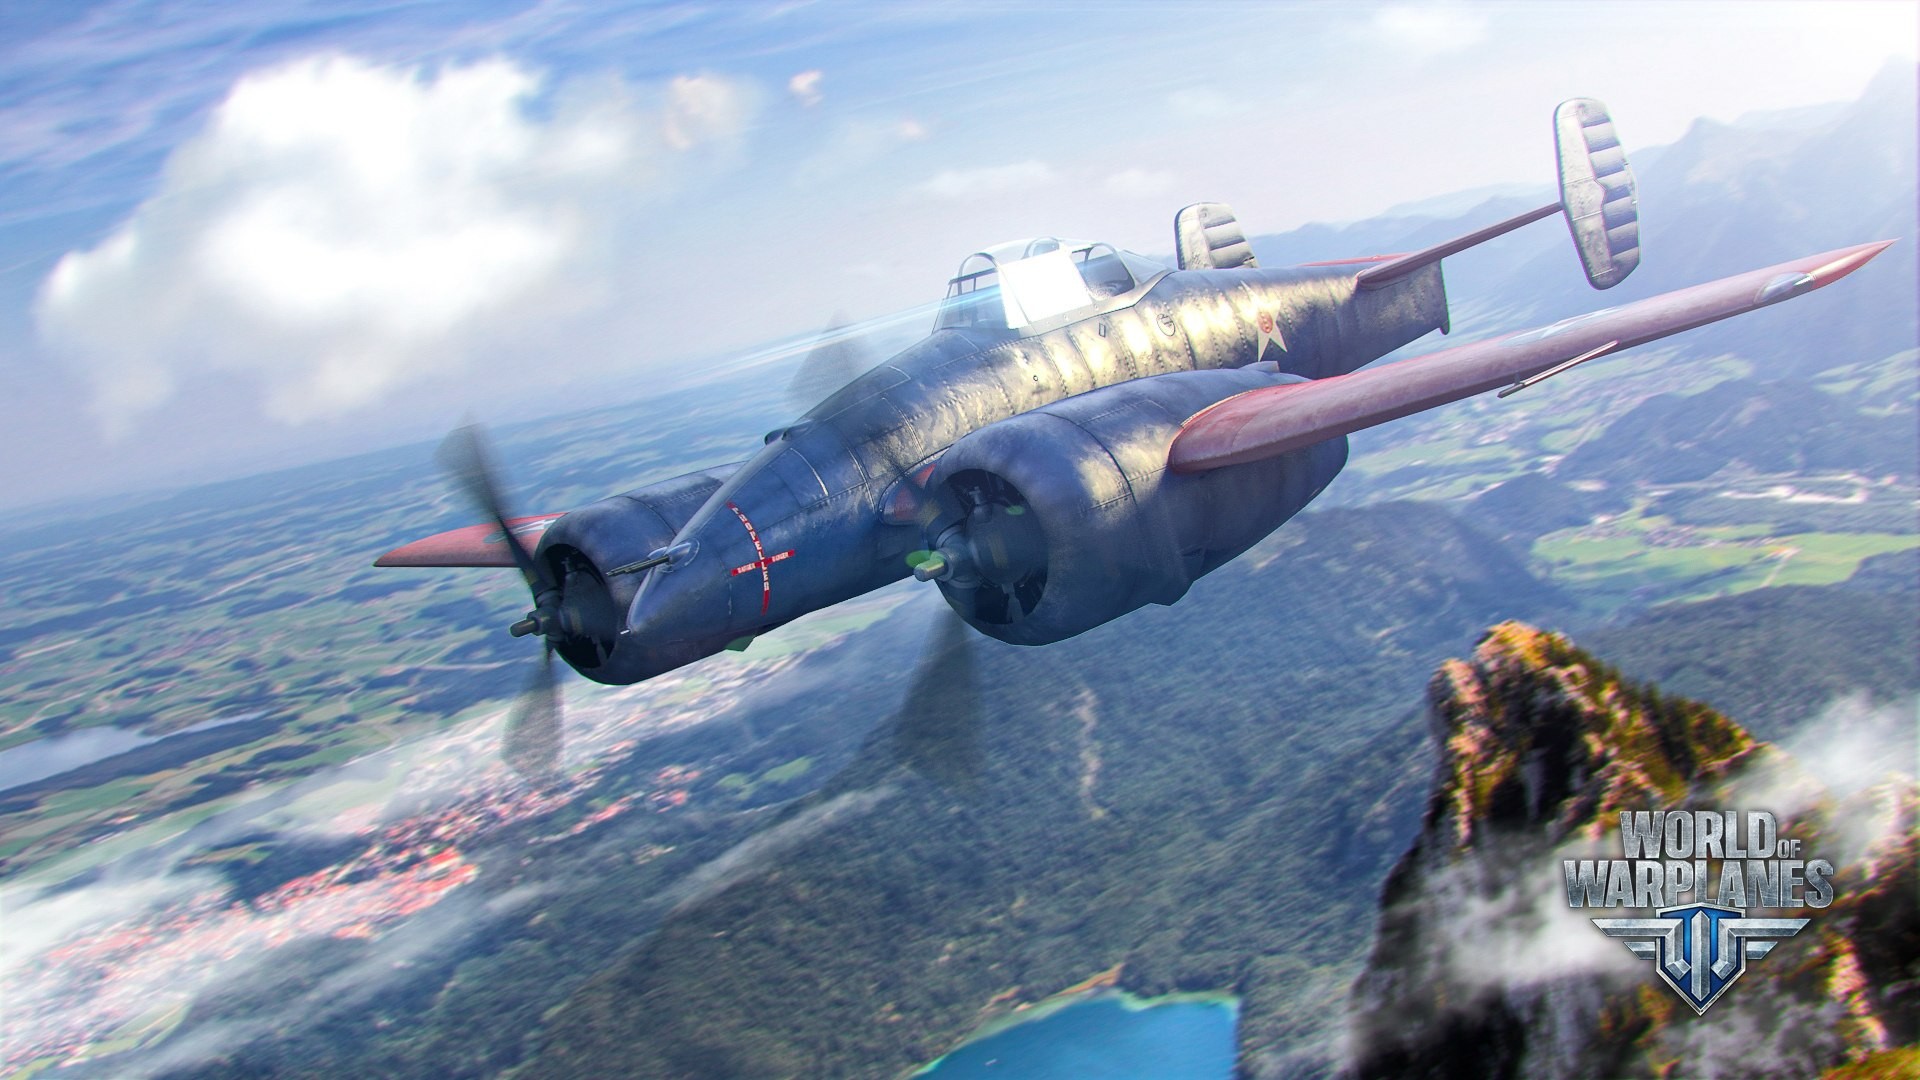 General 1920x1080 World of Warplanes military aircraft wargaming airplane video games American aircraft